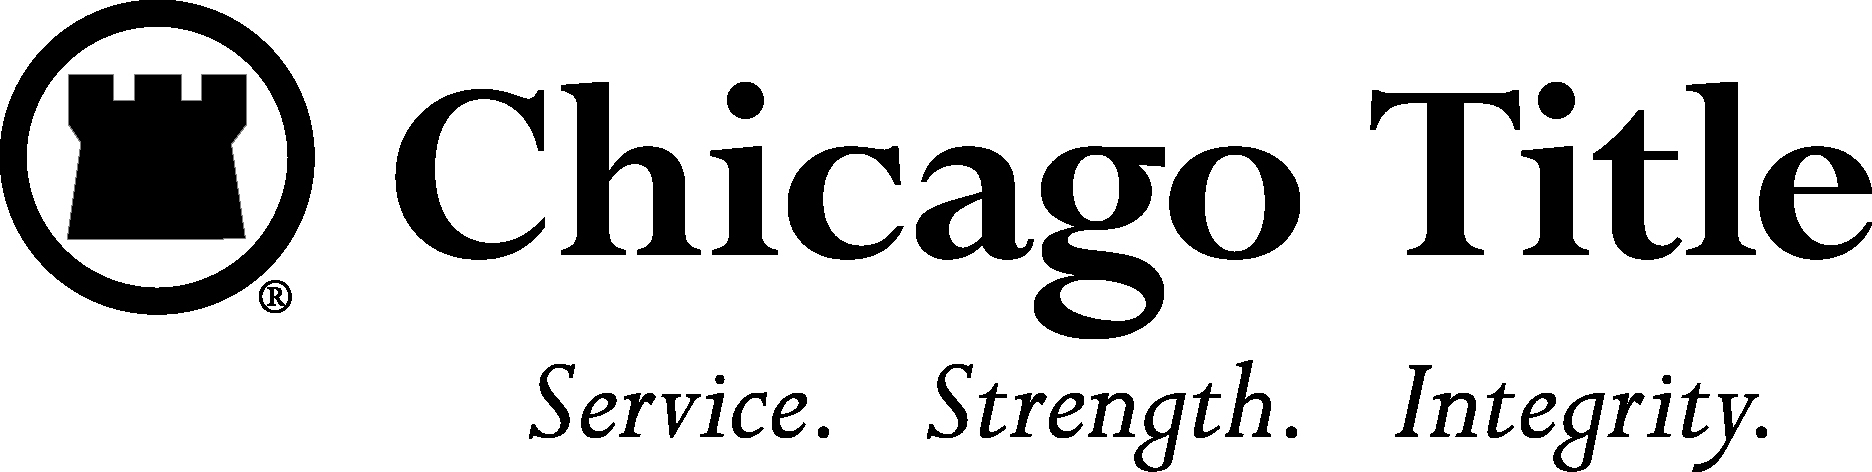 Chicago Title horiz (1)